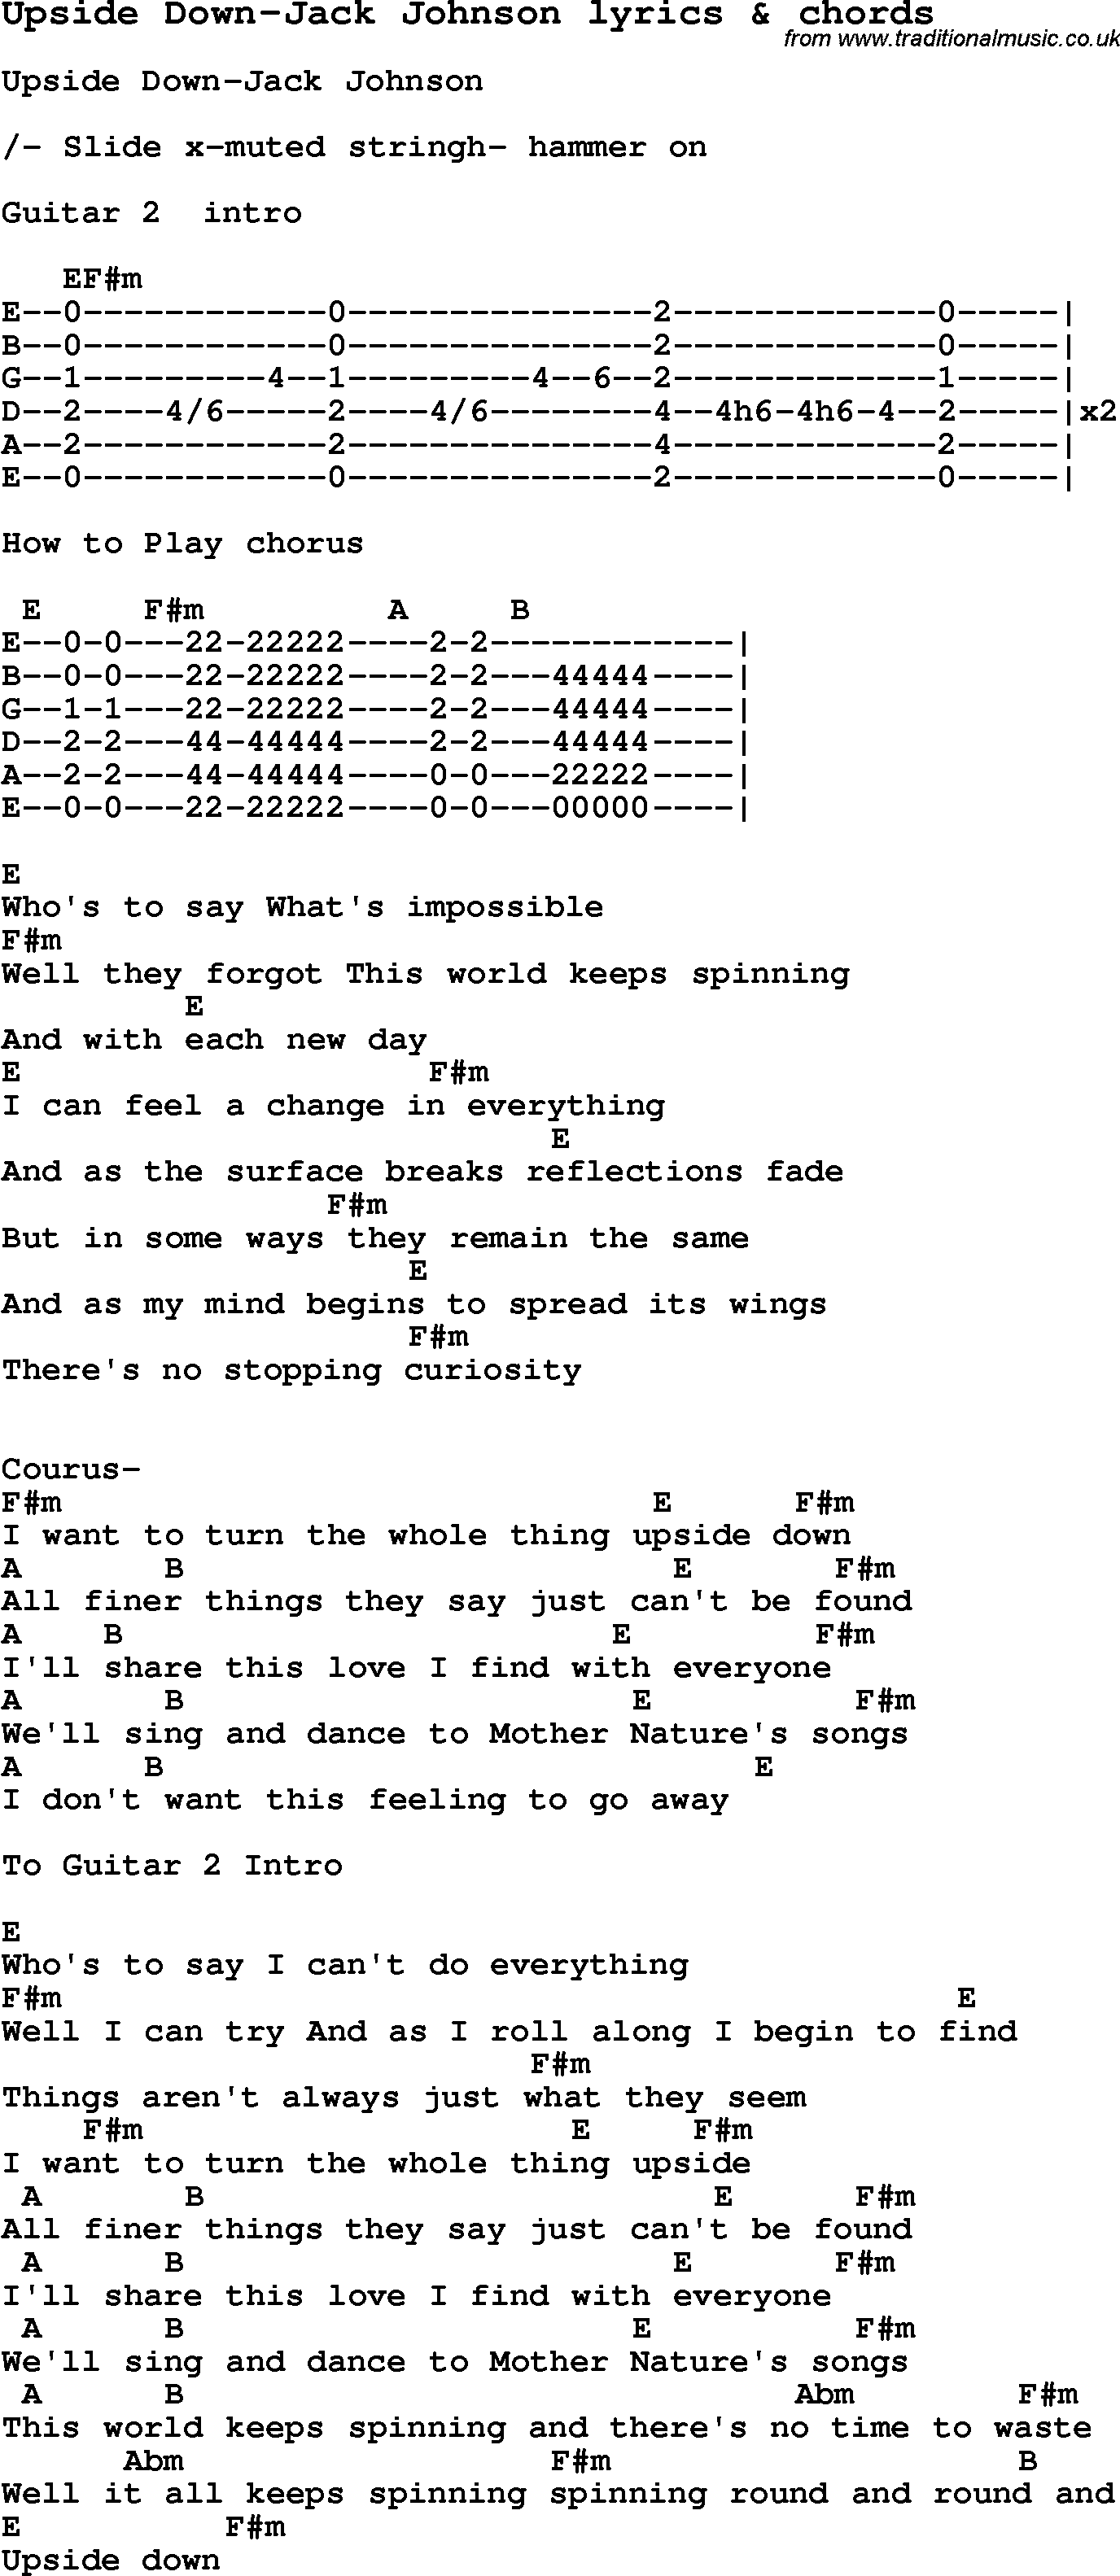 Love Song Lyrics for: Upside Down-Jack Johnson with chords for Ukulele, Guitar Banjo etc.